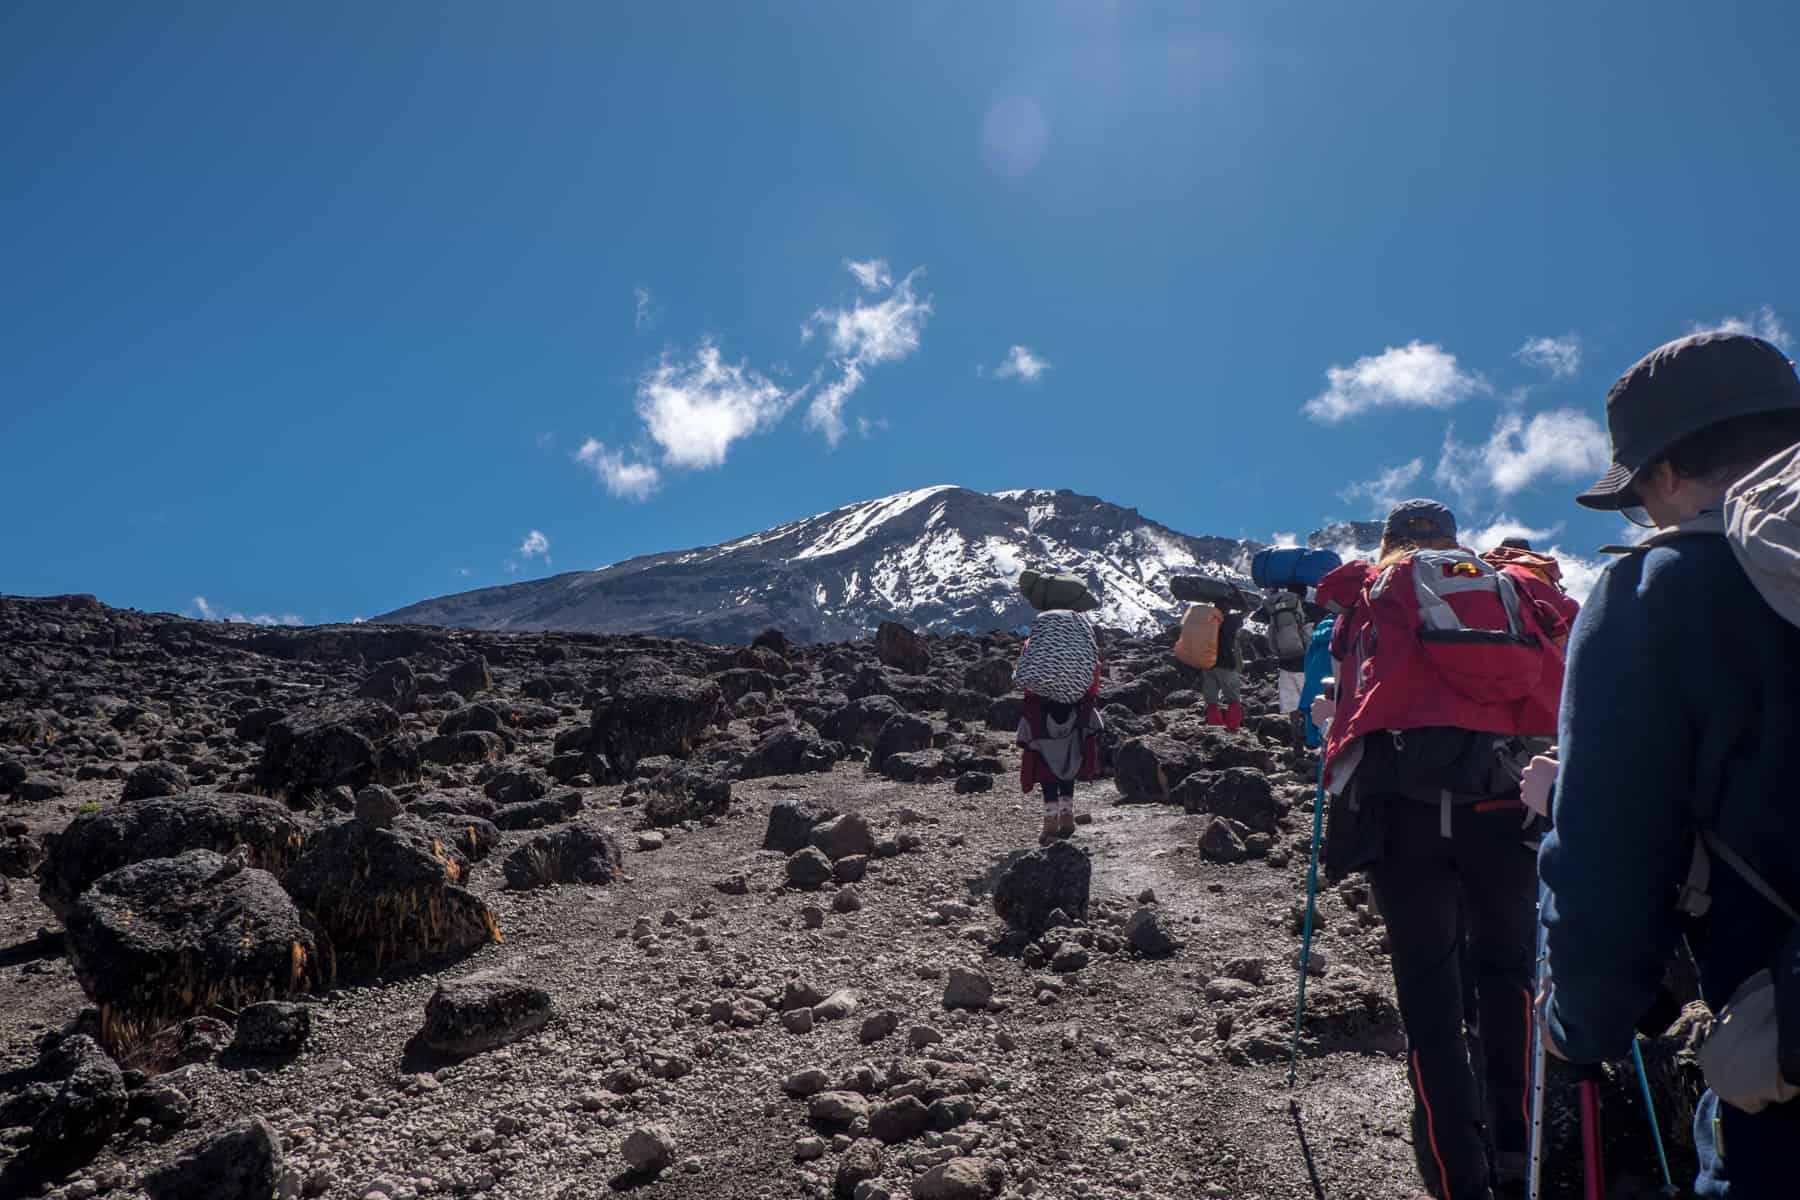 Trekkers follow porters on a trail through a rocky landscape, towards the Kilimanjaro mountain. 